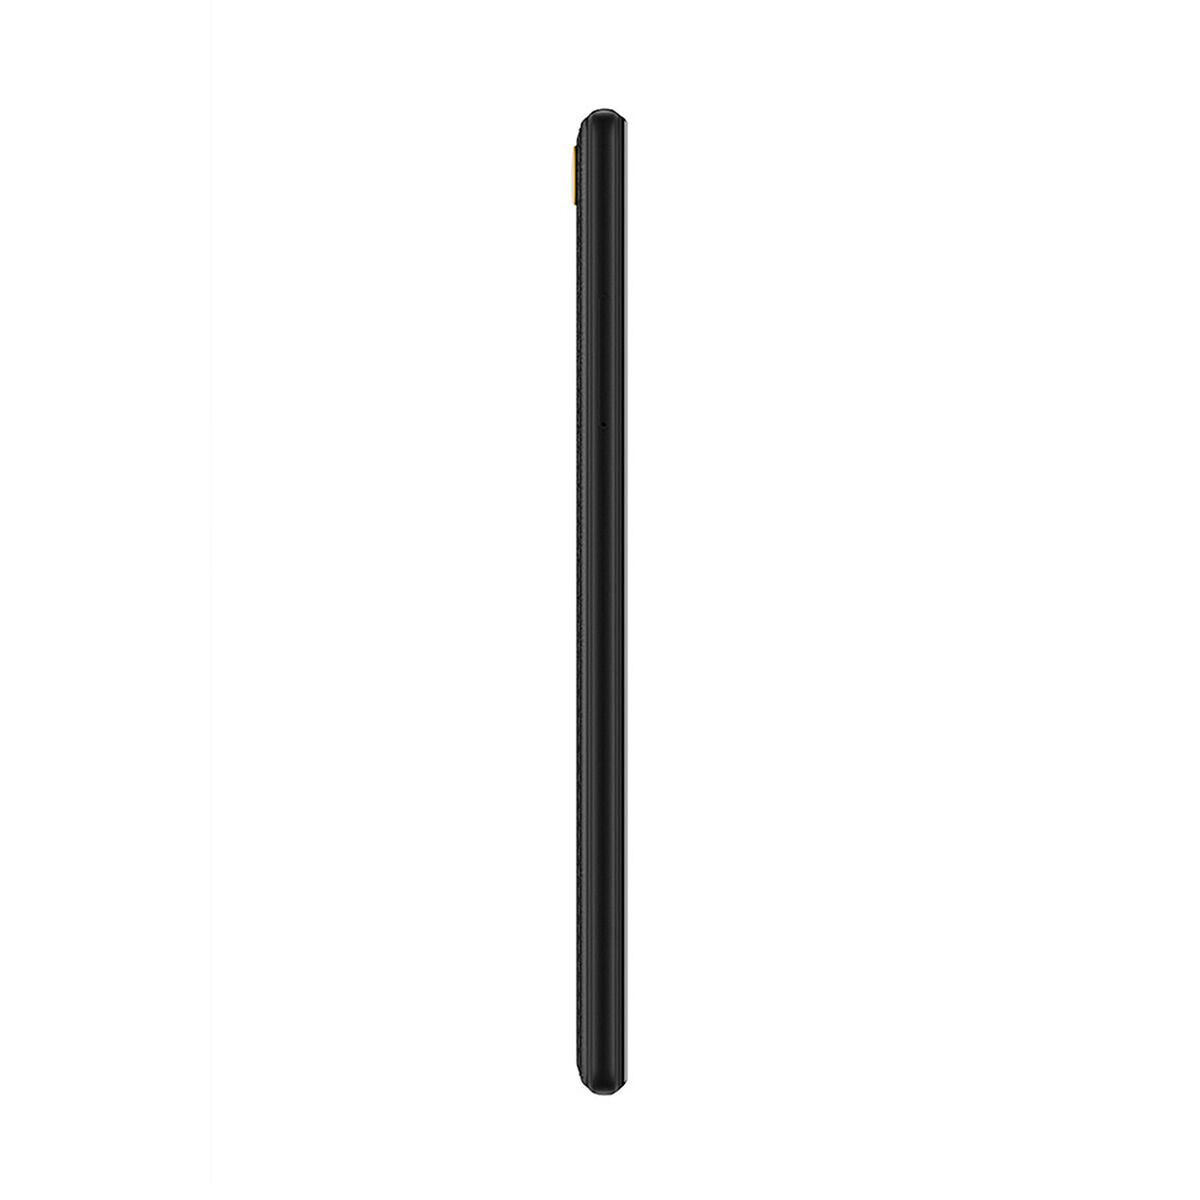 Celular Huawei Y5 Neo 16GB 5,5" Negro Claro